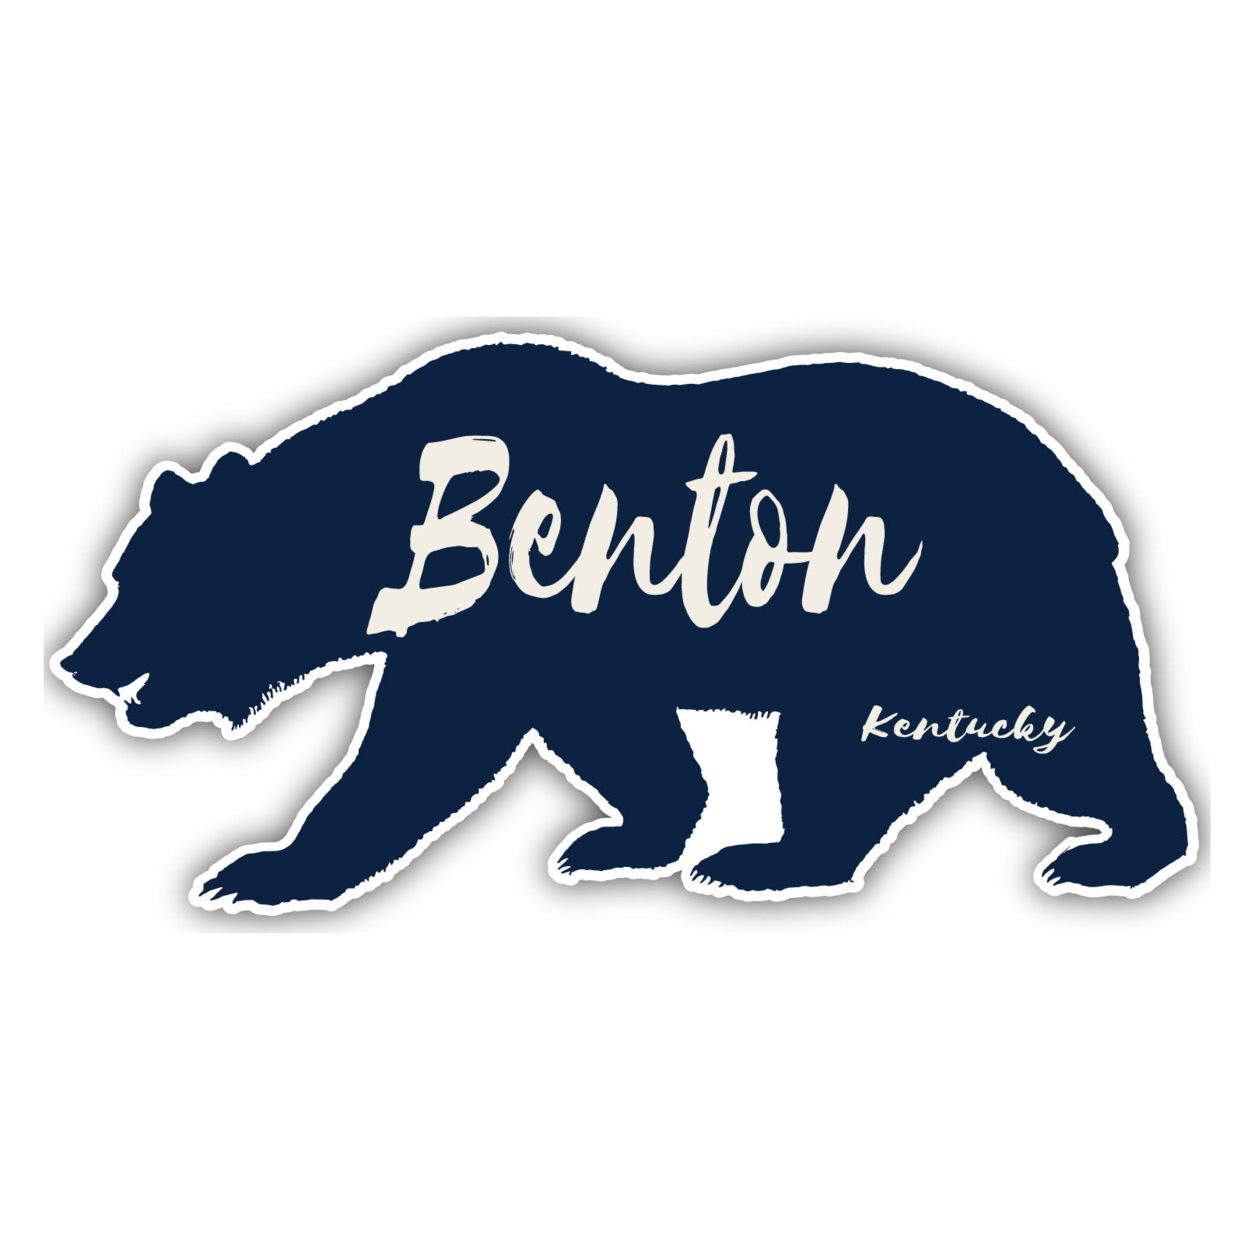 Benton Kentucky Souvenir Decorative Stickers (Choose Theme And Size) - 4-Pack, 2-Inch, Bear